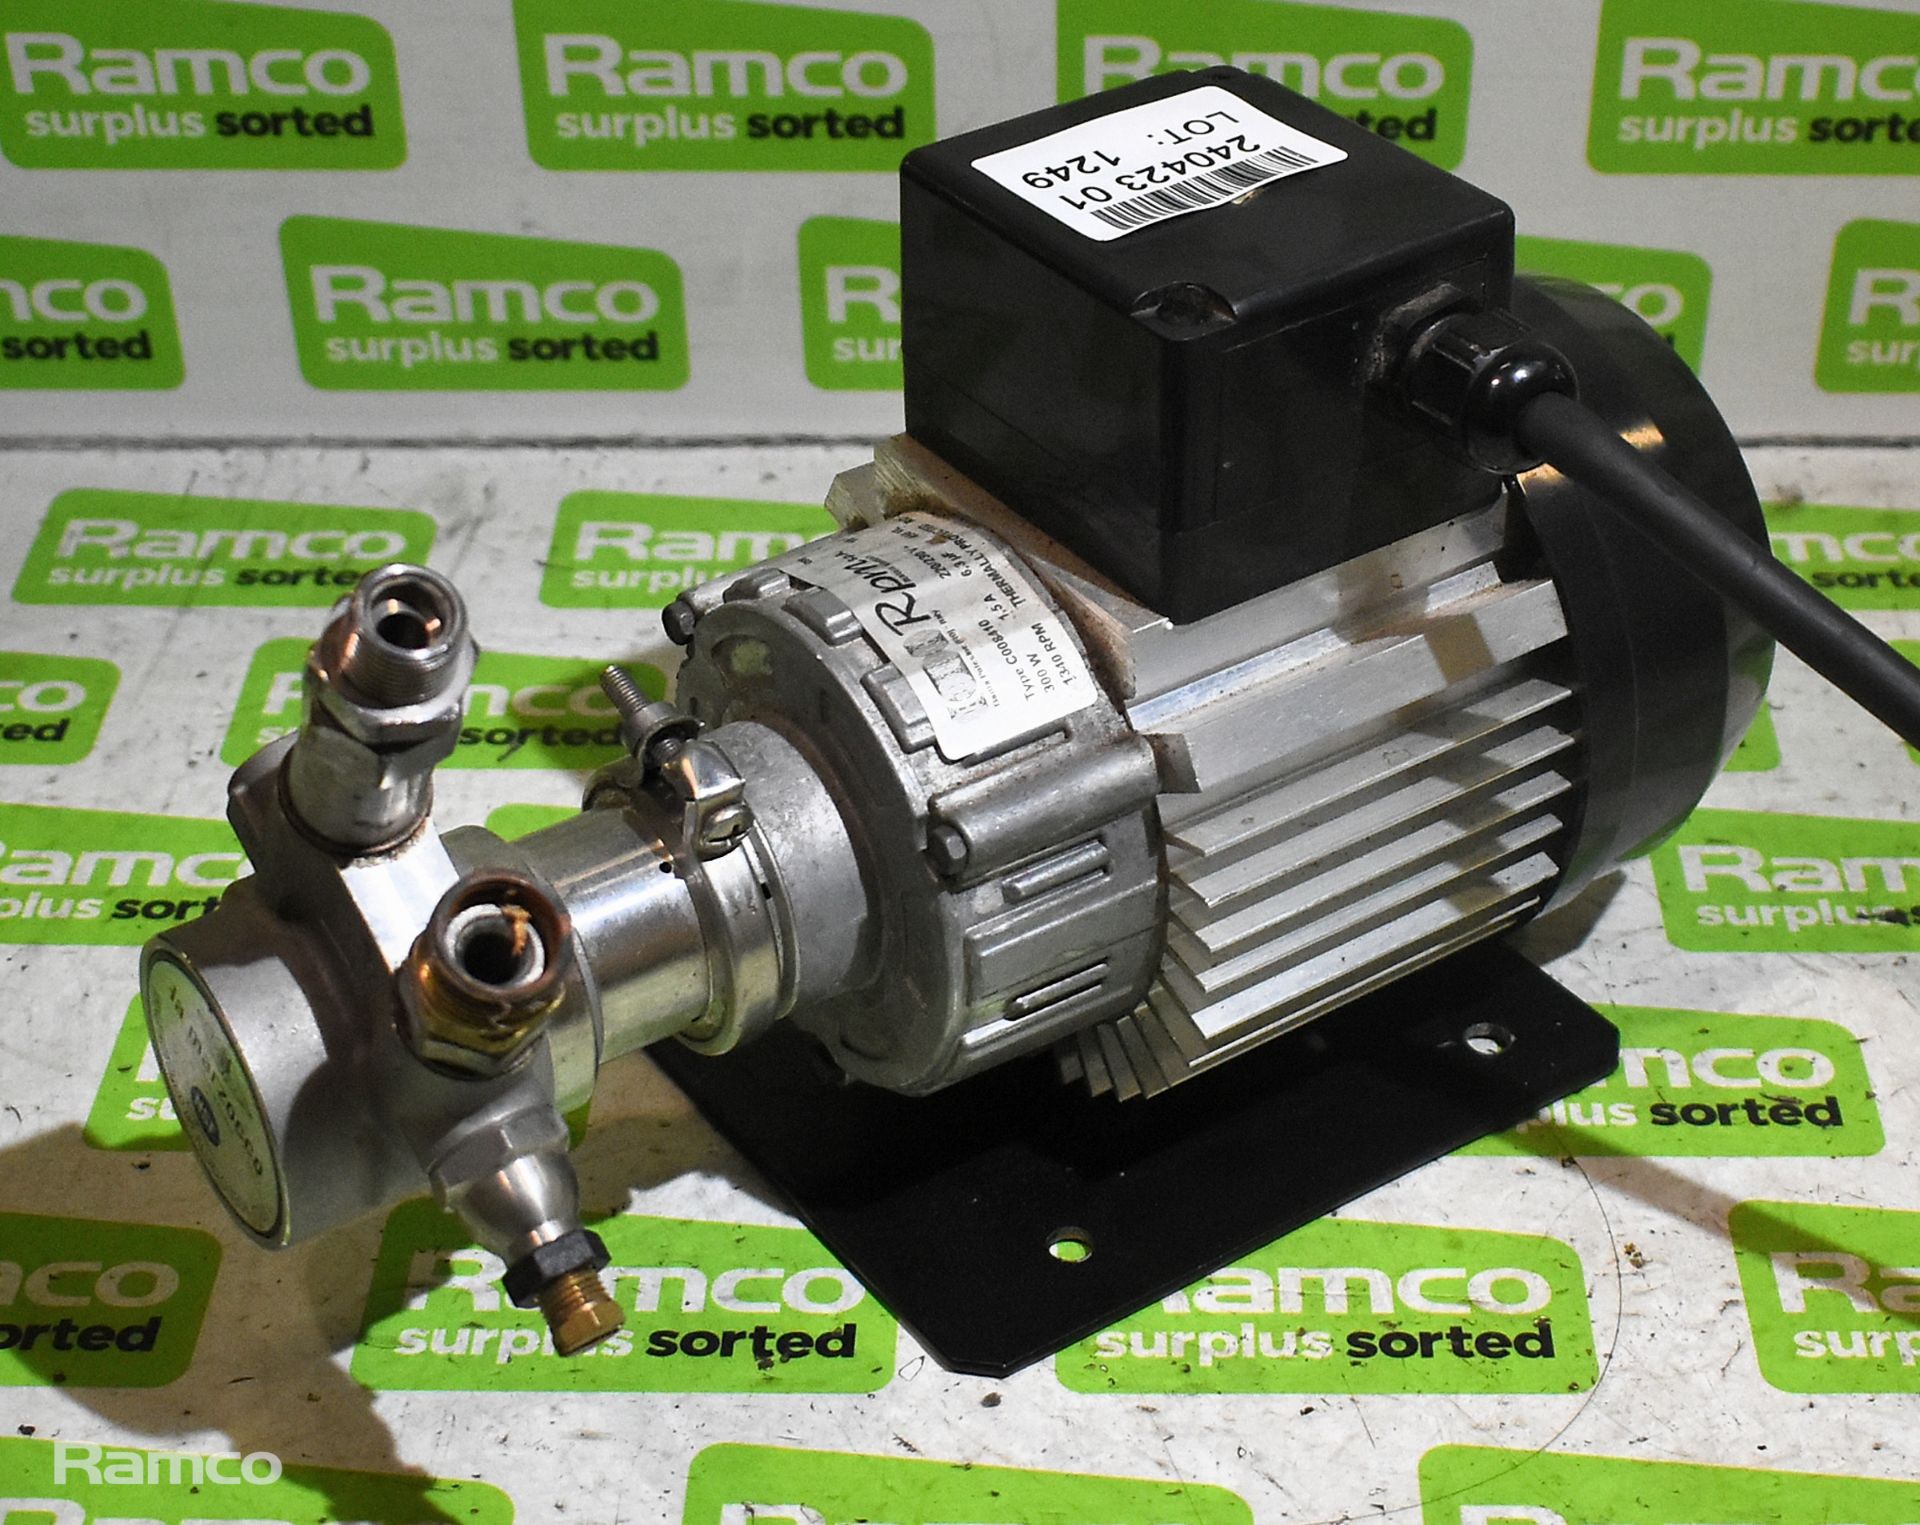 RPM C008410 pump - 220/230V - 300W - Image 3 of 5